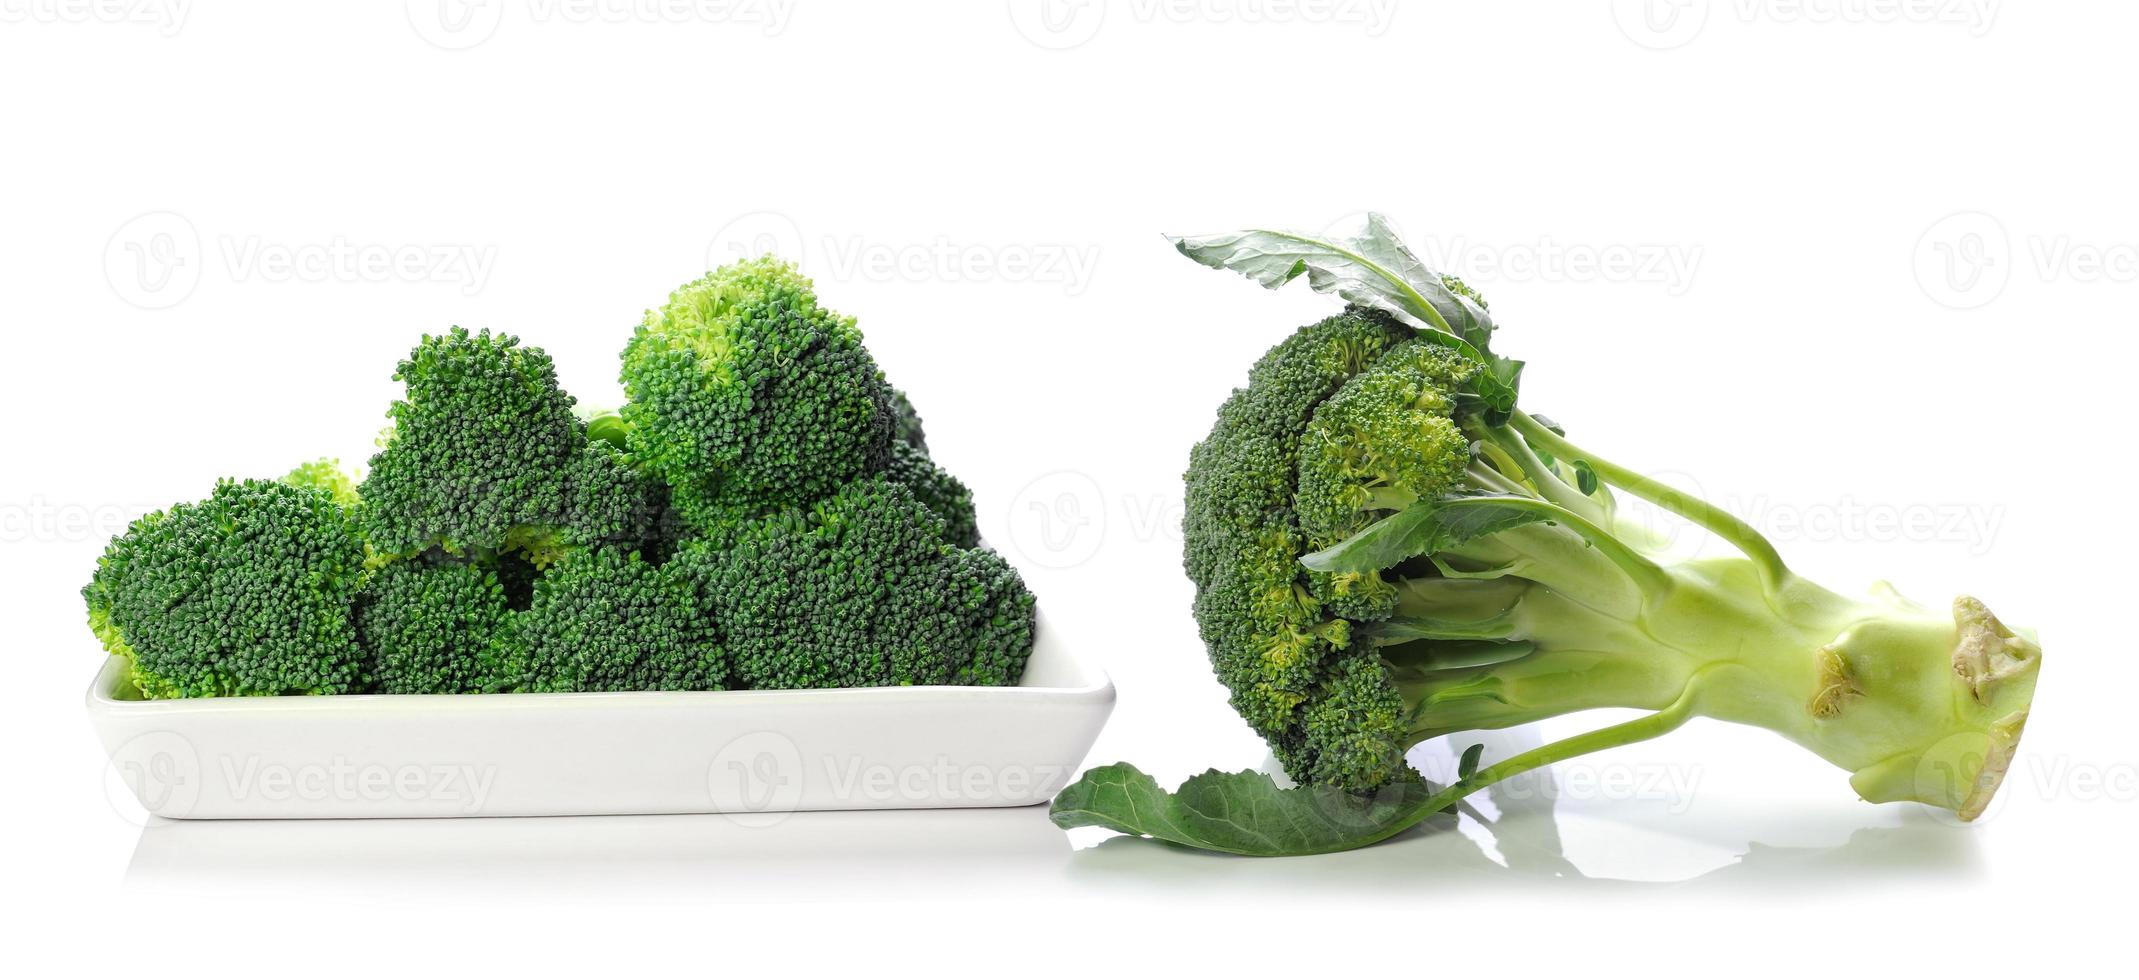 färsk broccoli på vit bakgrund foto